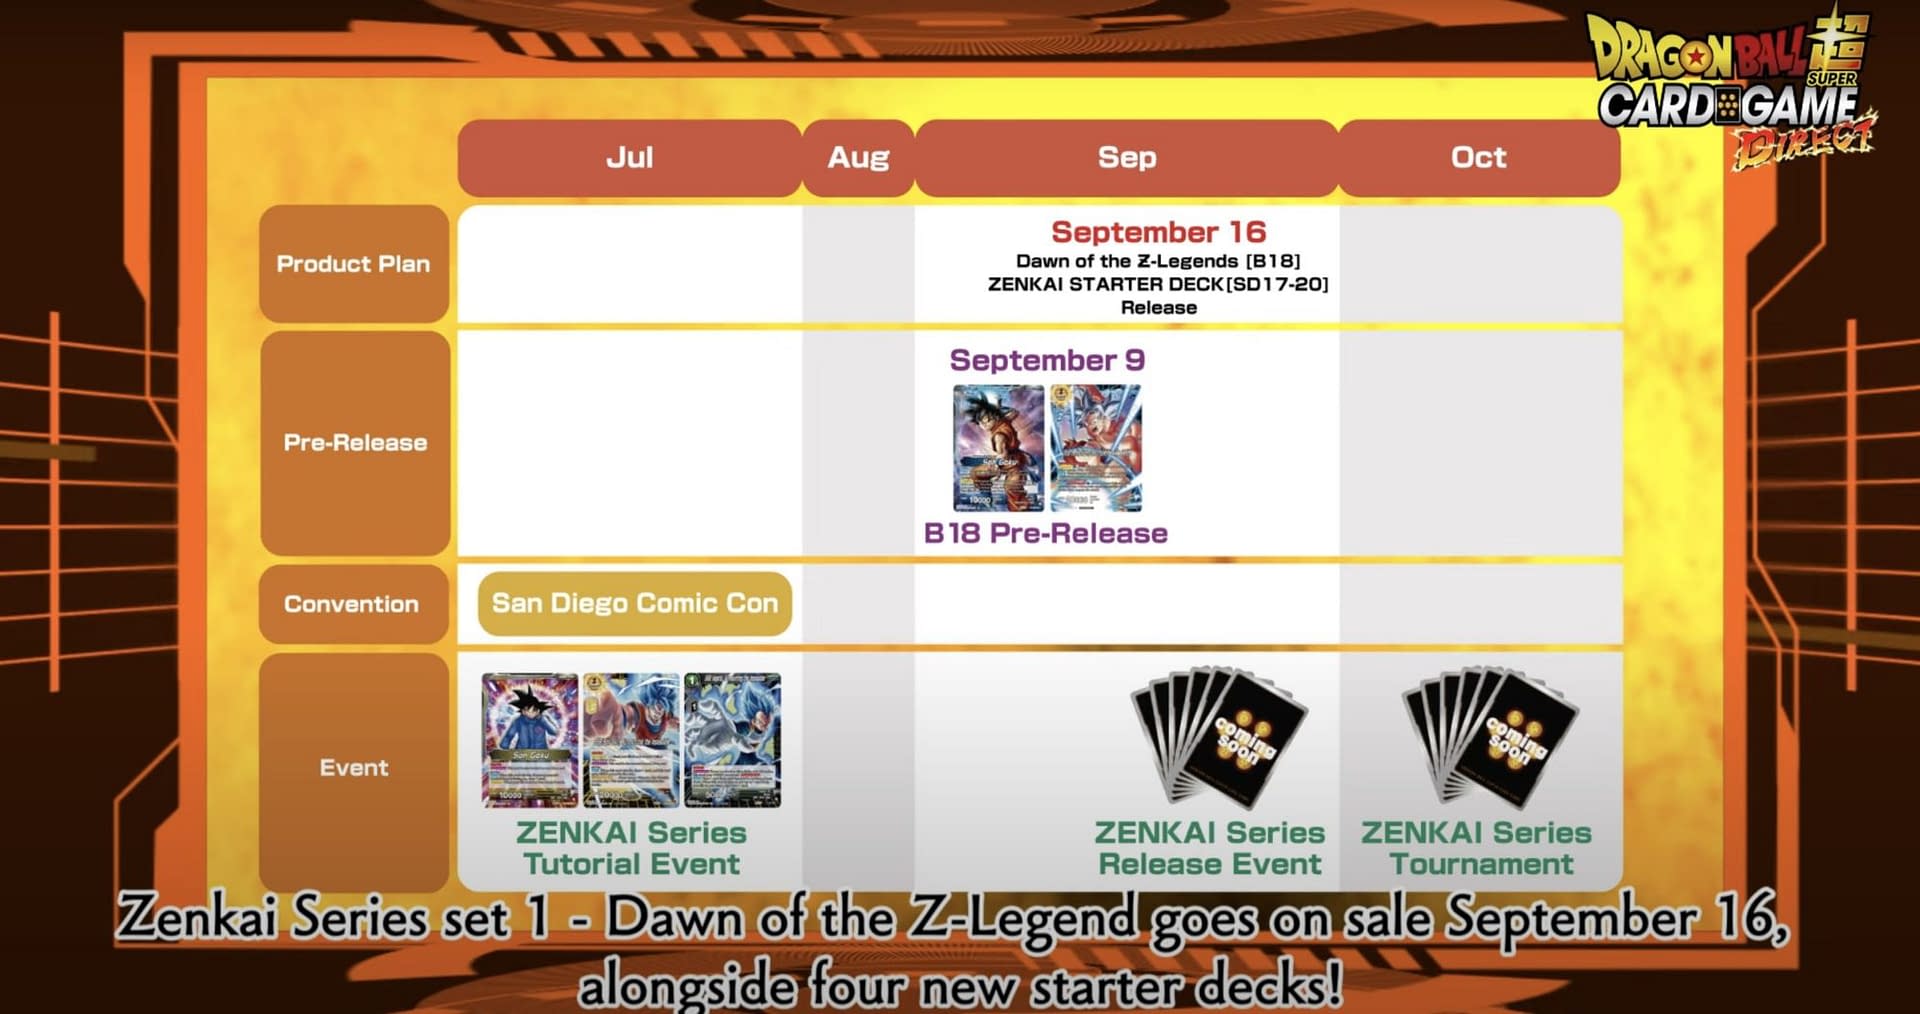 Dragon Ball Super Card Game Reveals Zenkai Series At SDCC